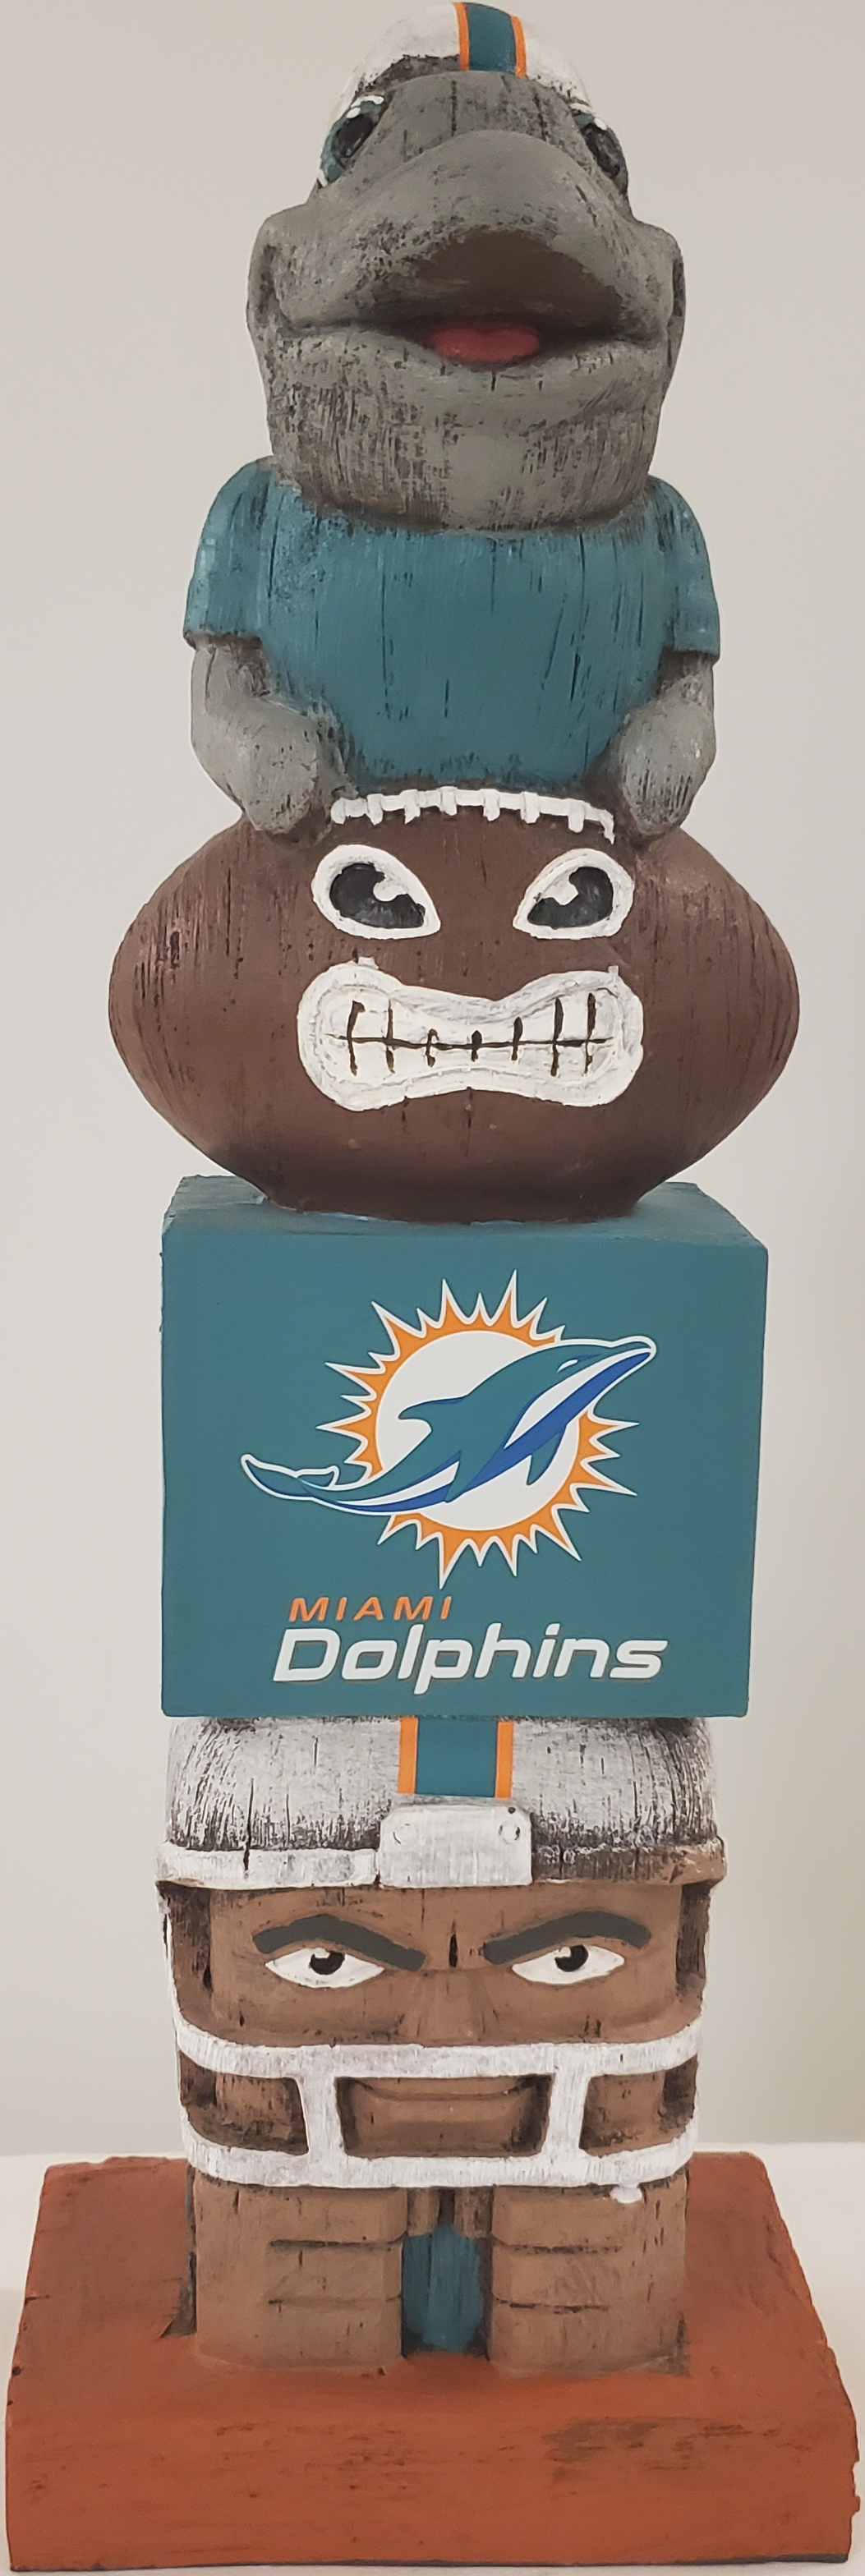 Miami Dolphins Totem